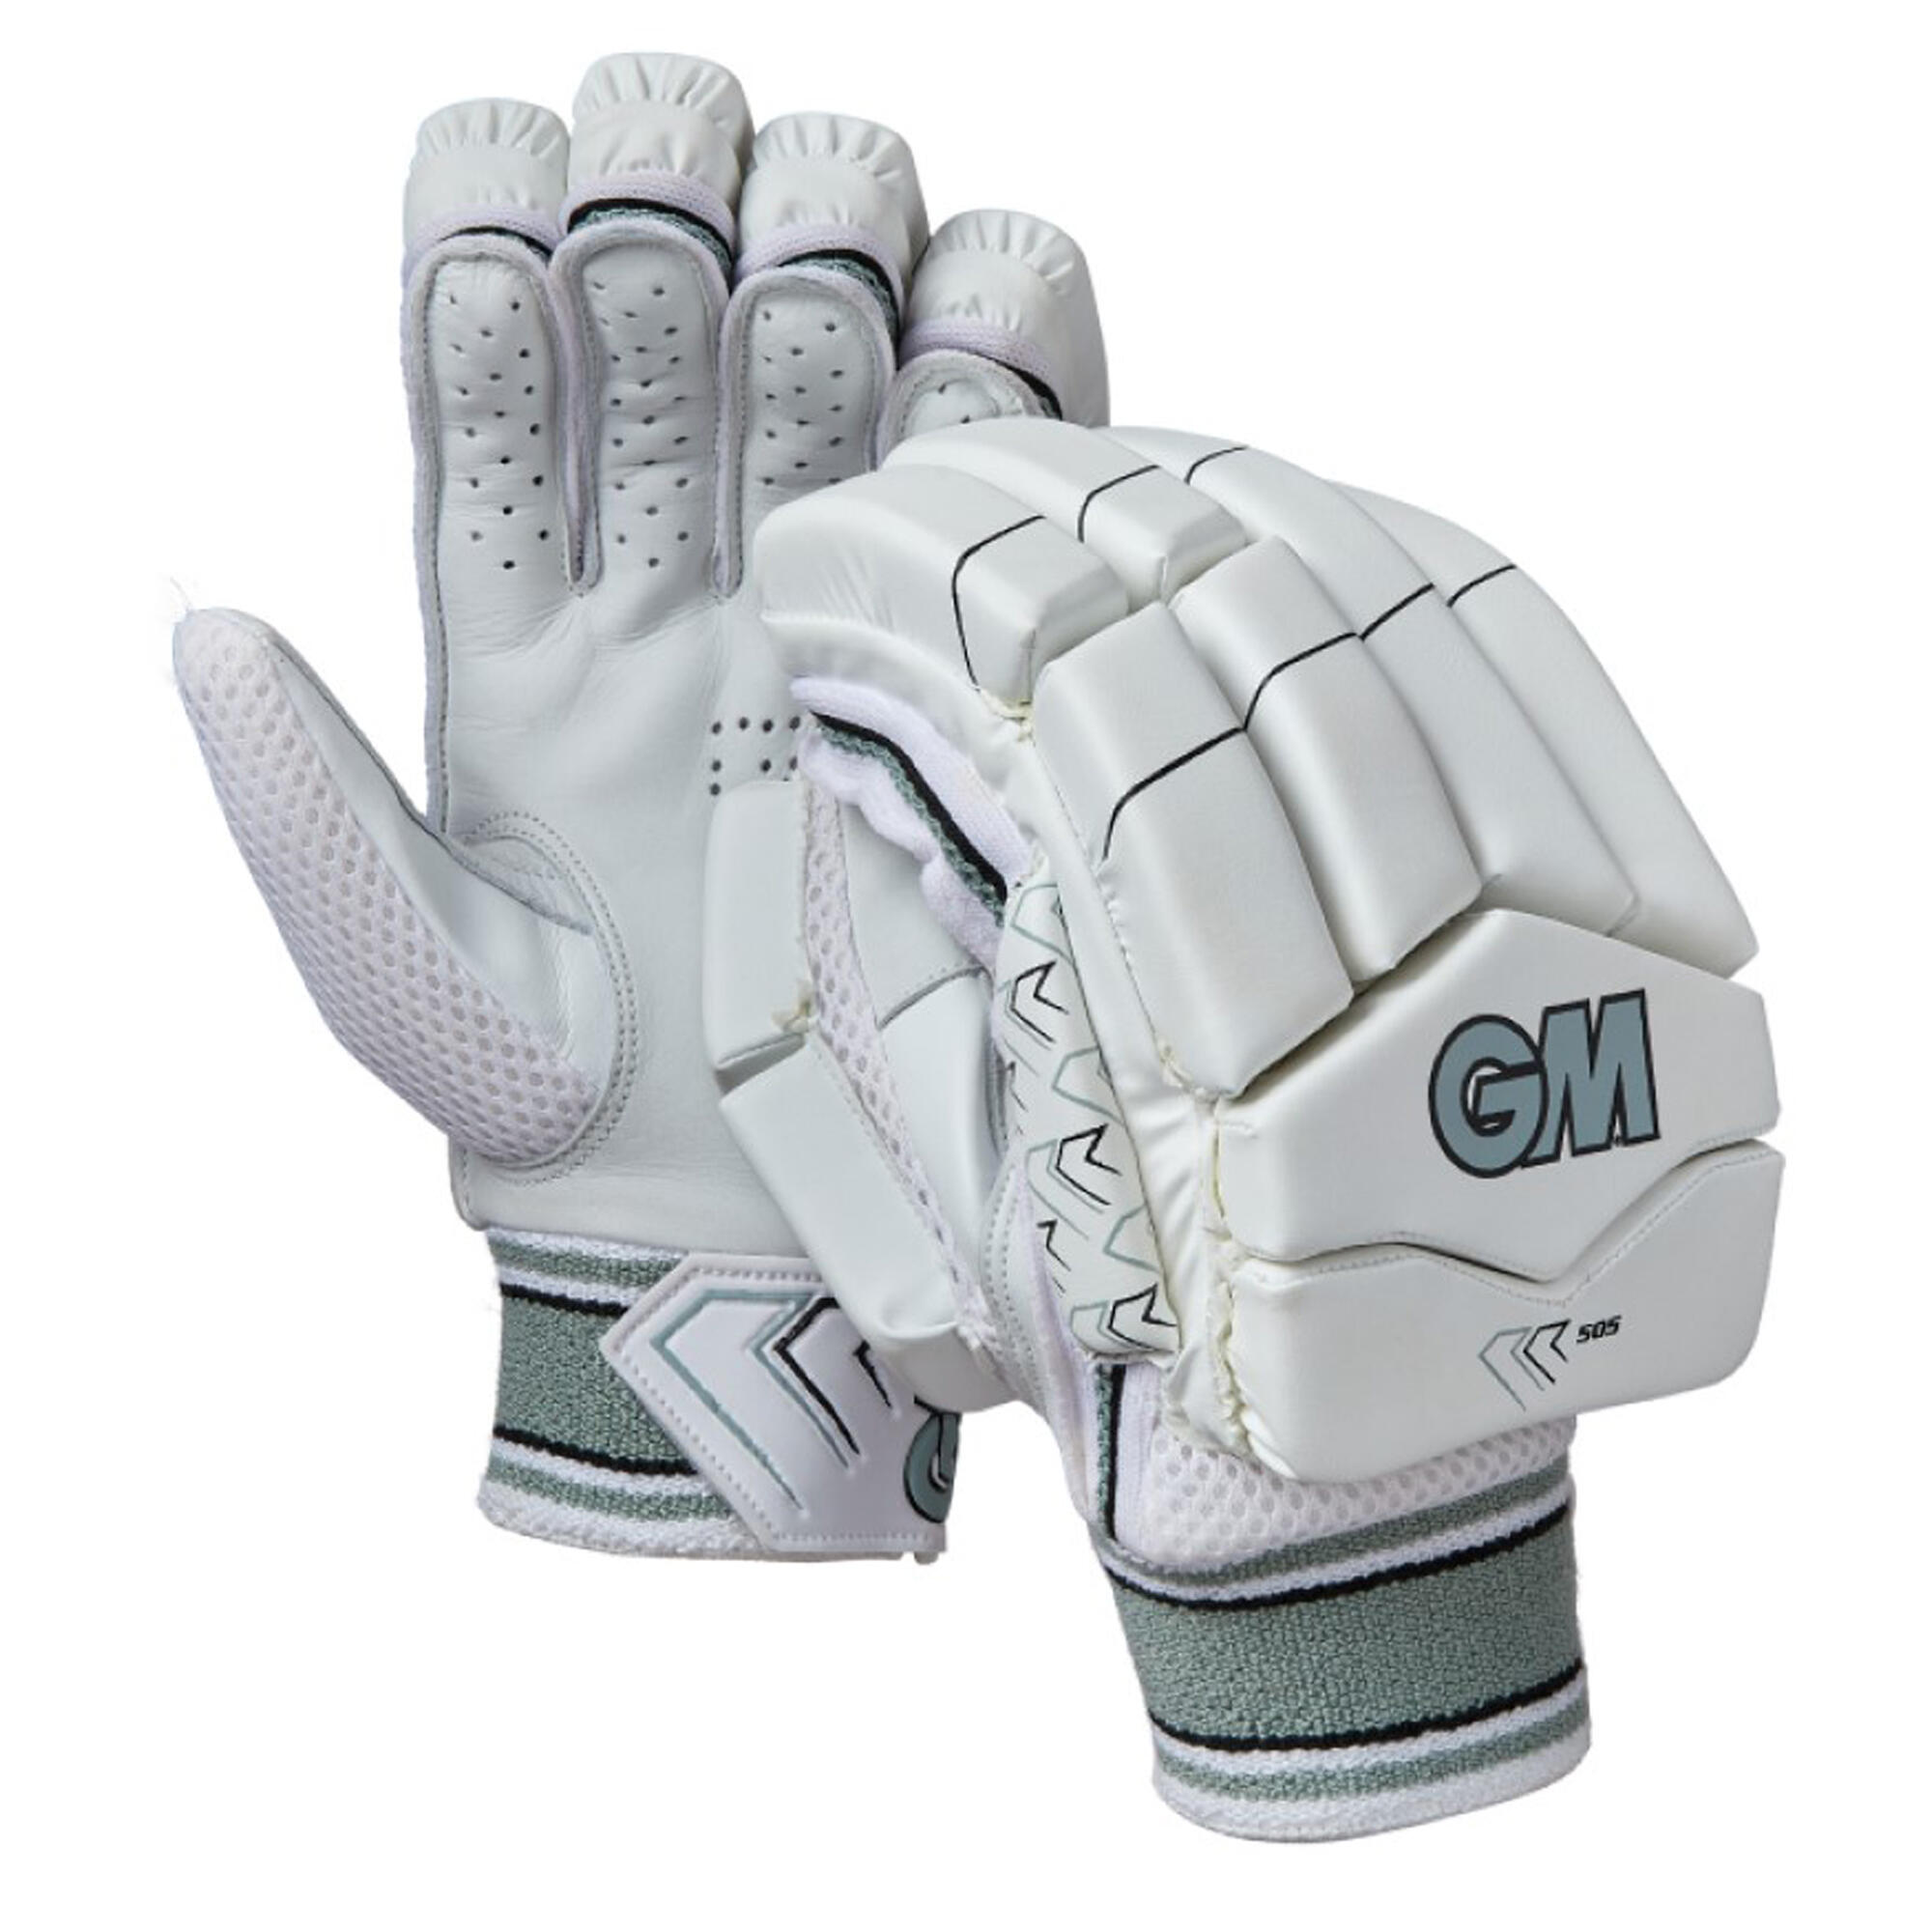 GM Kryos 505 Cricket Batting Gloves 1/2